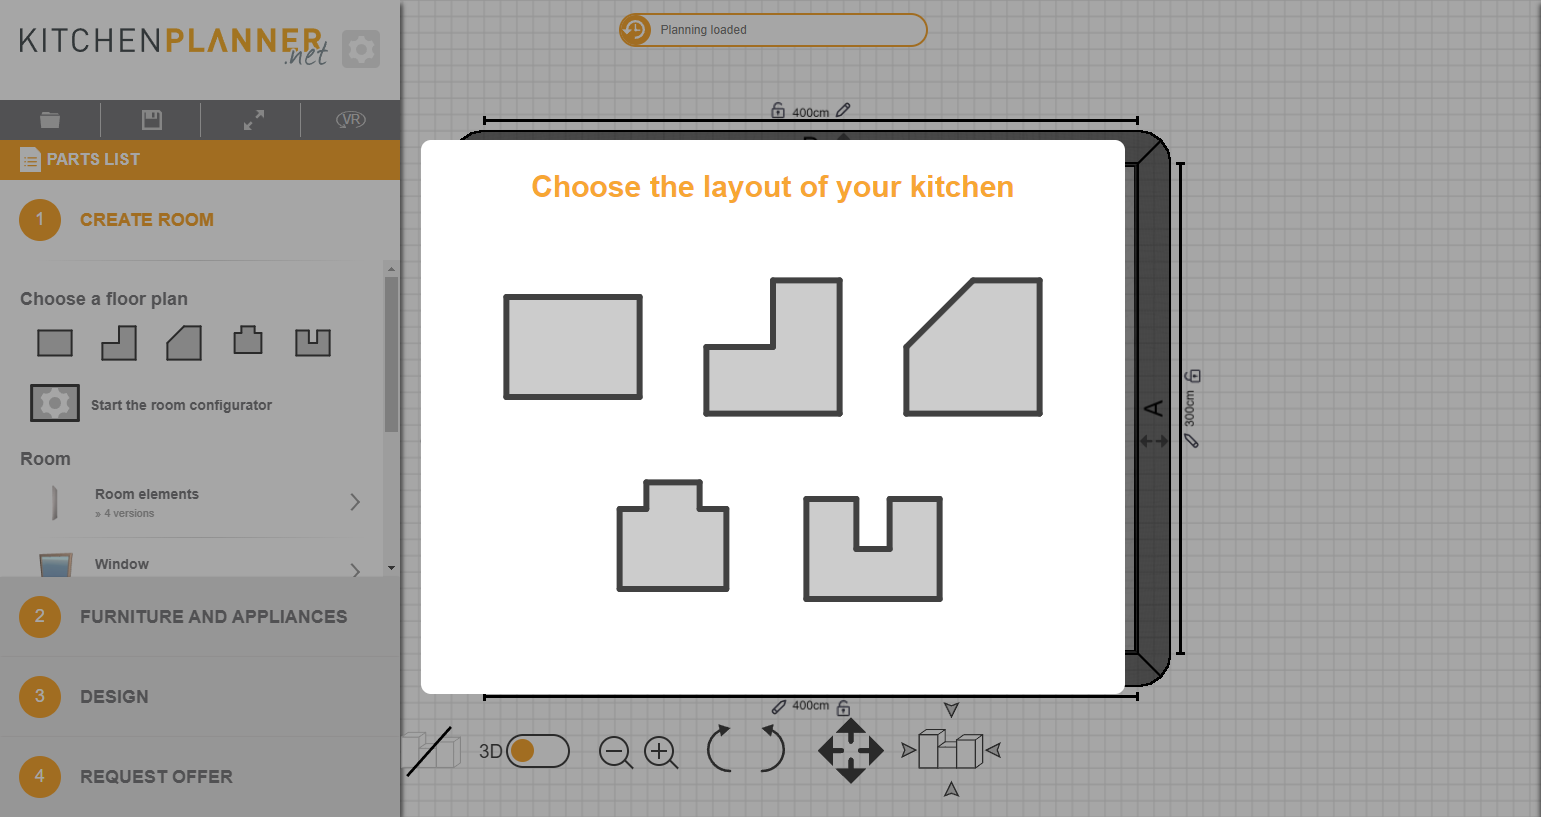 A Screenshot of Kitchenplanner.net's Layout Options